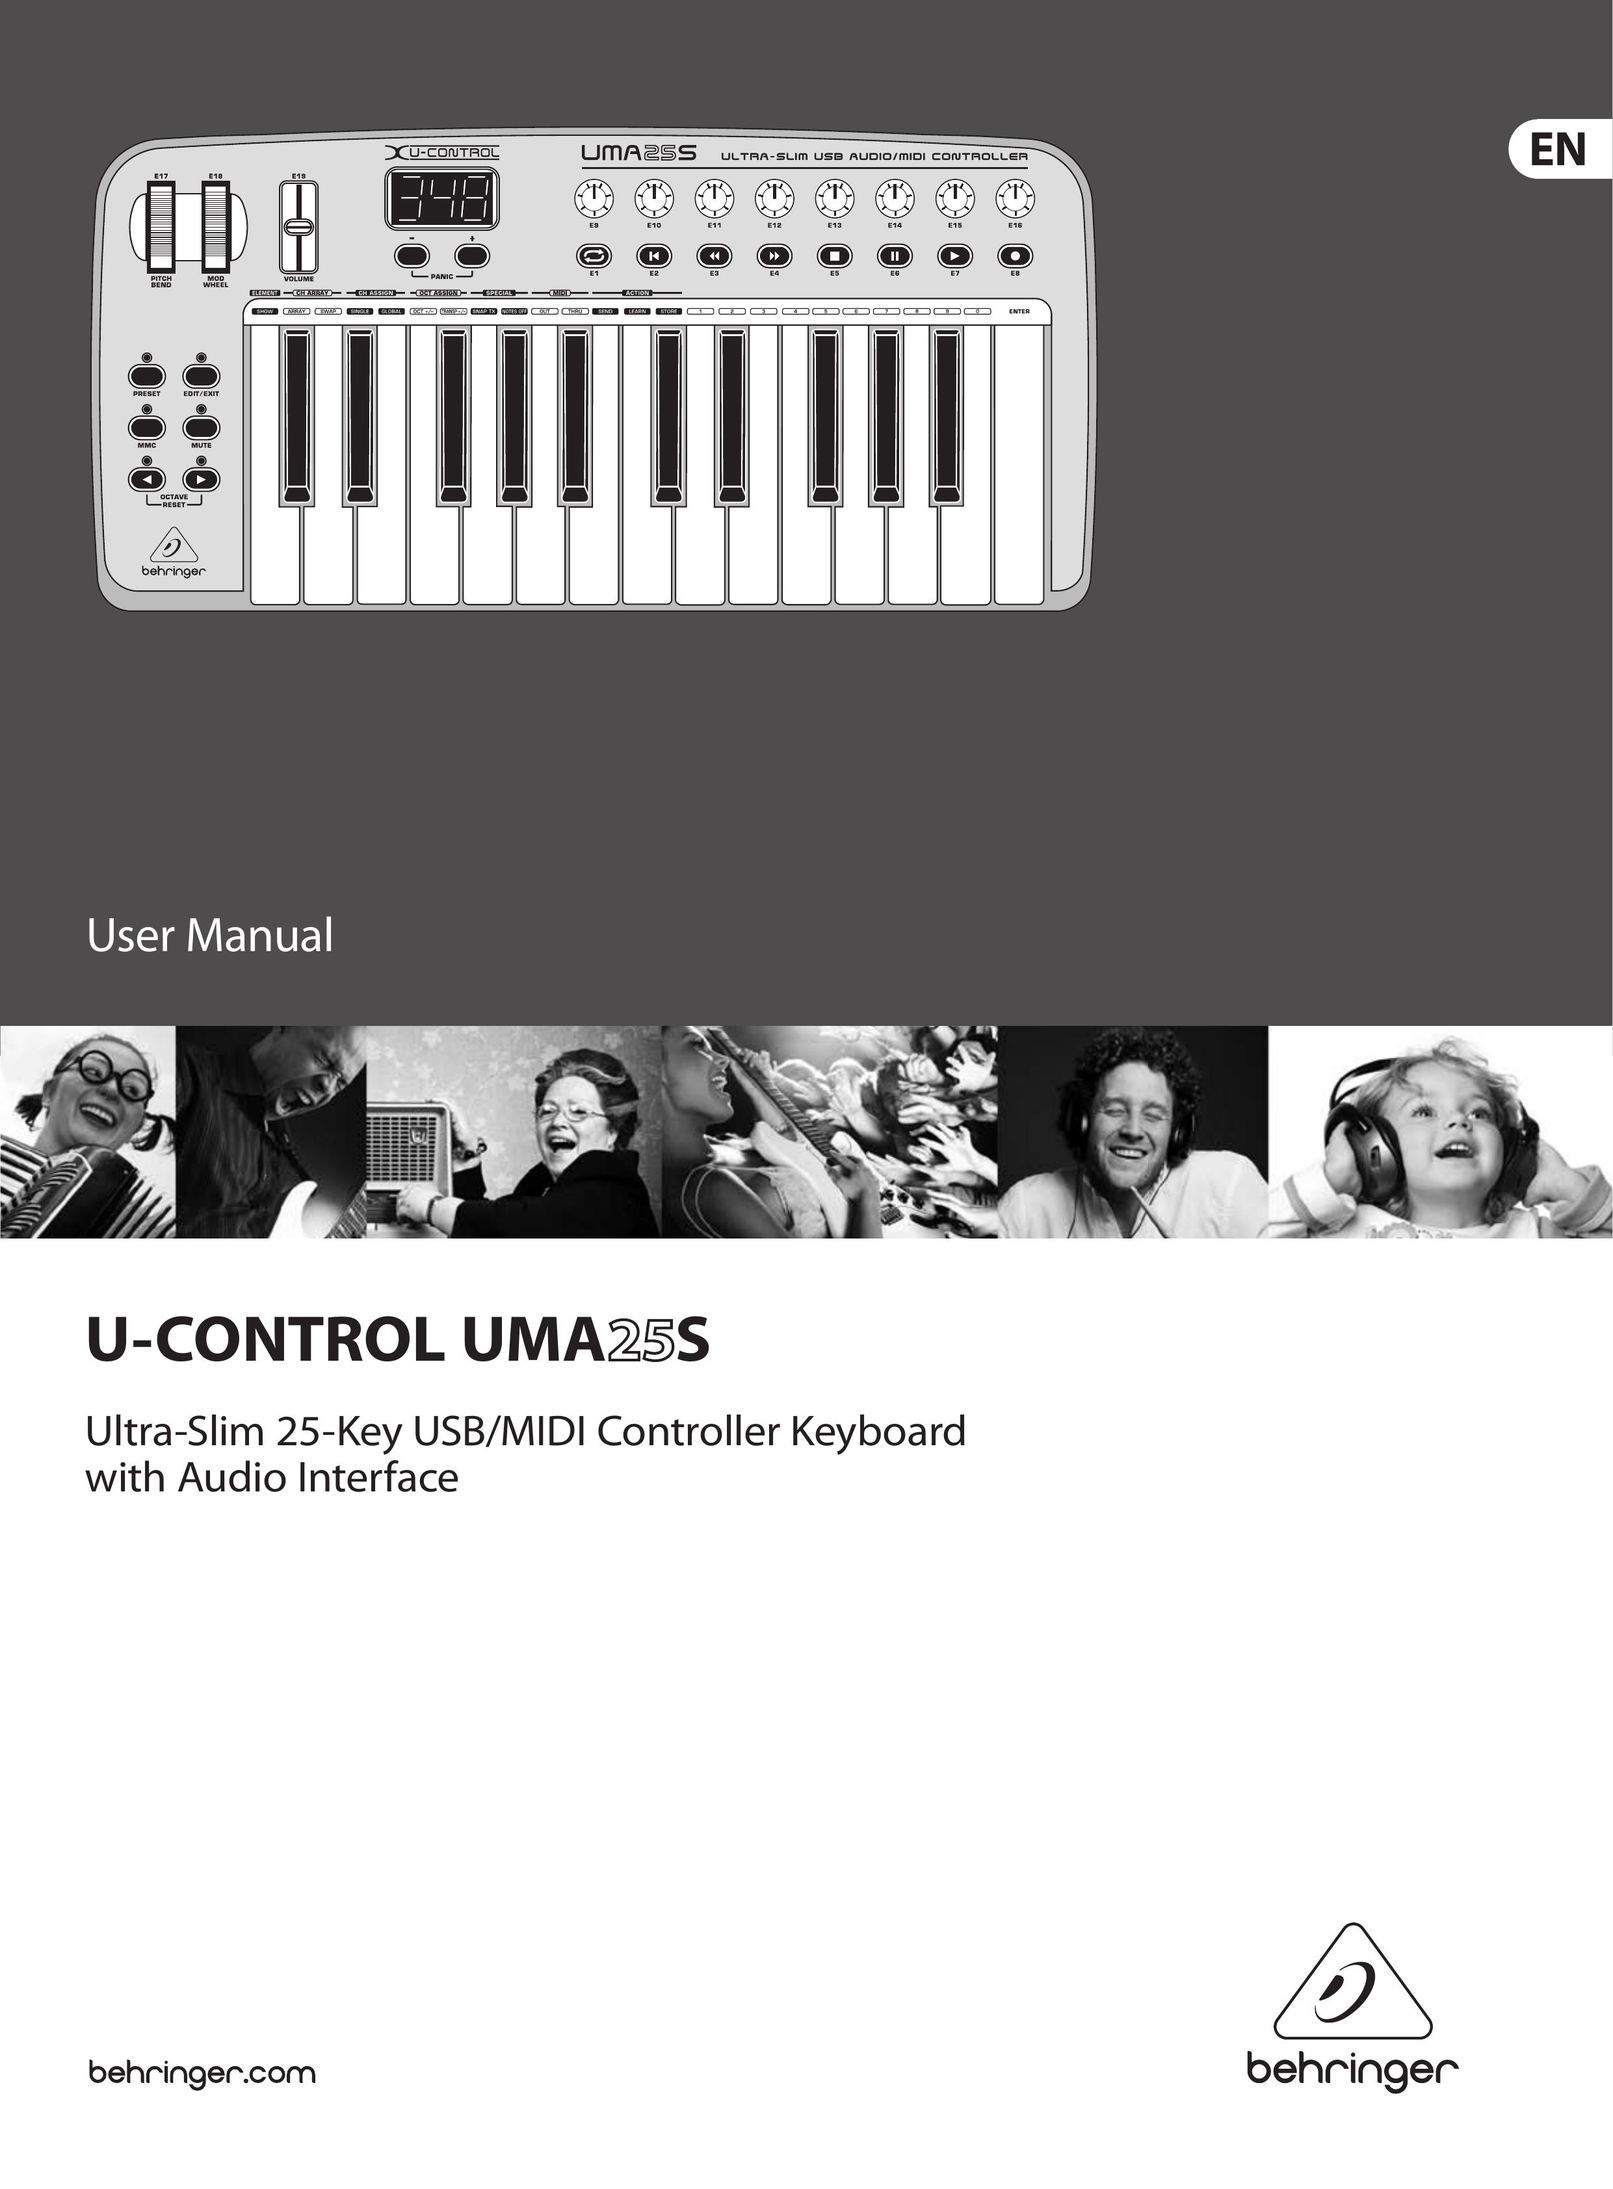 Behringer UMA25S Video Game Keyboard User Manual